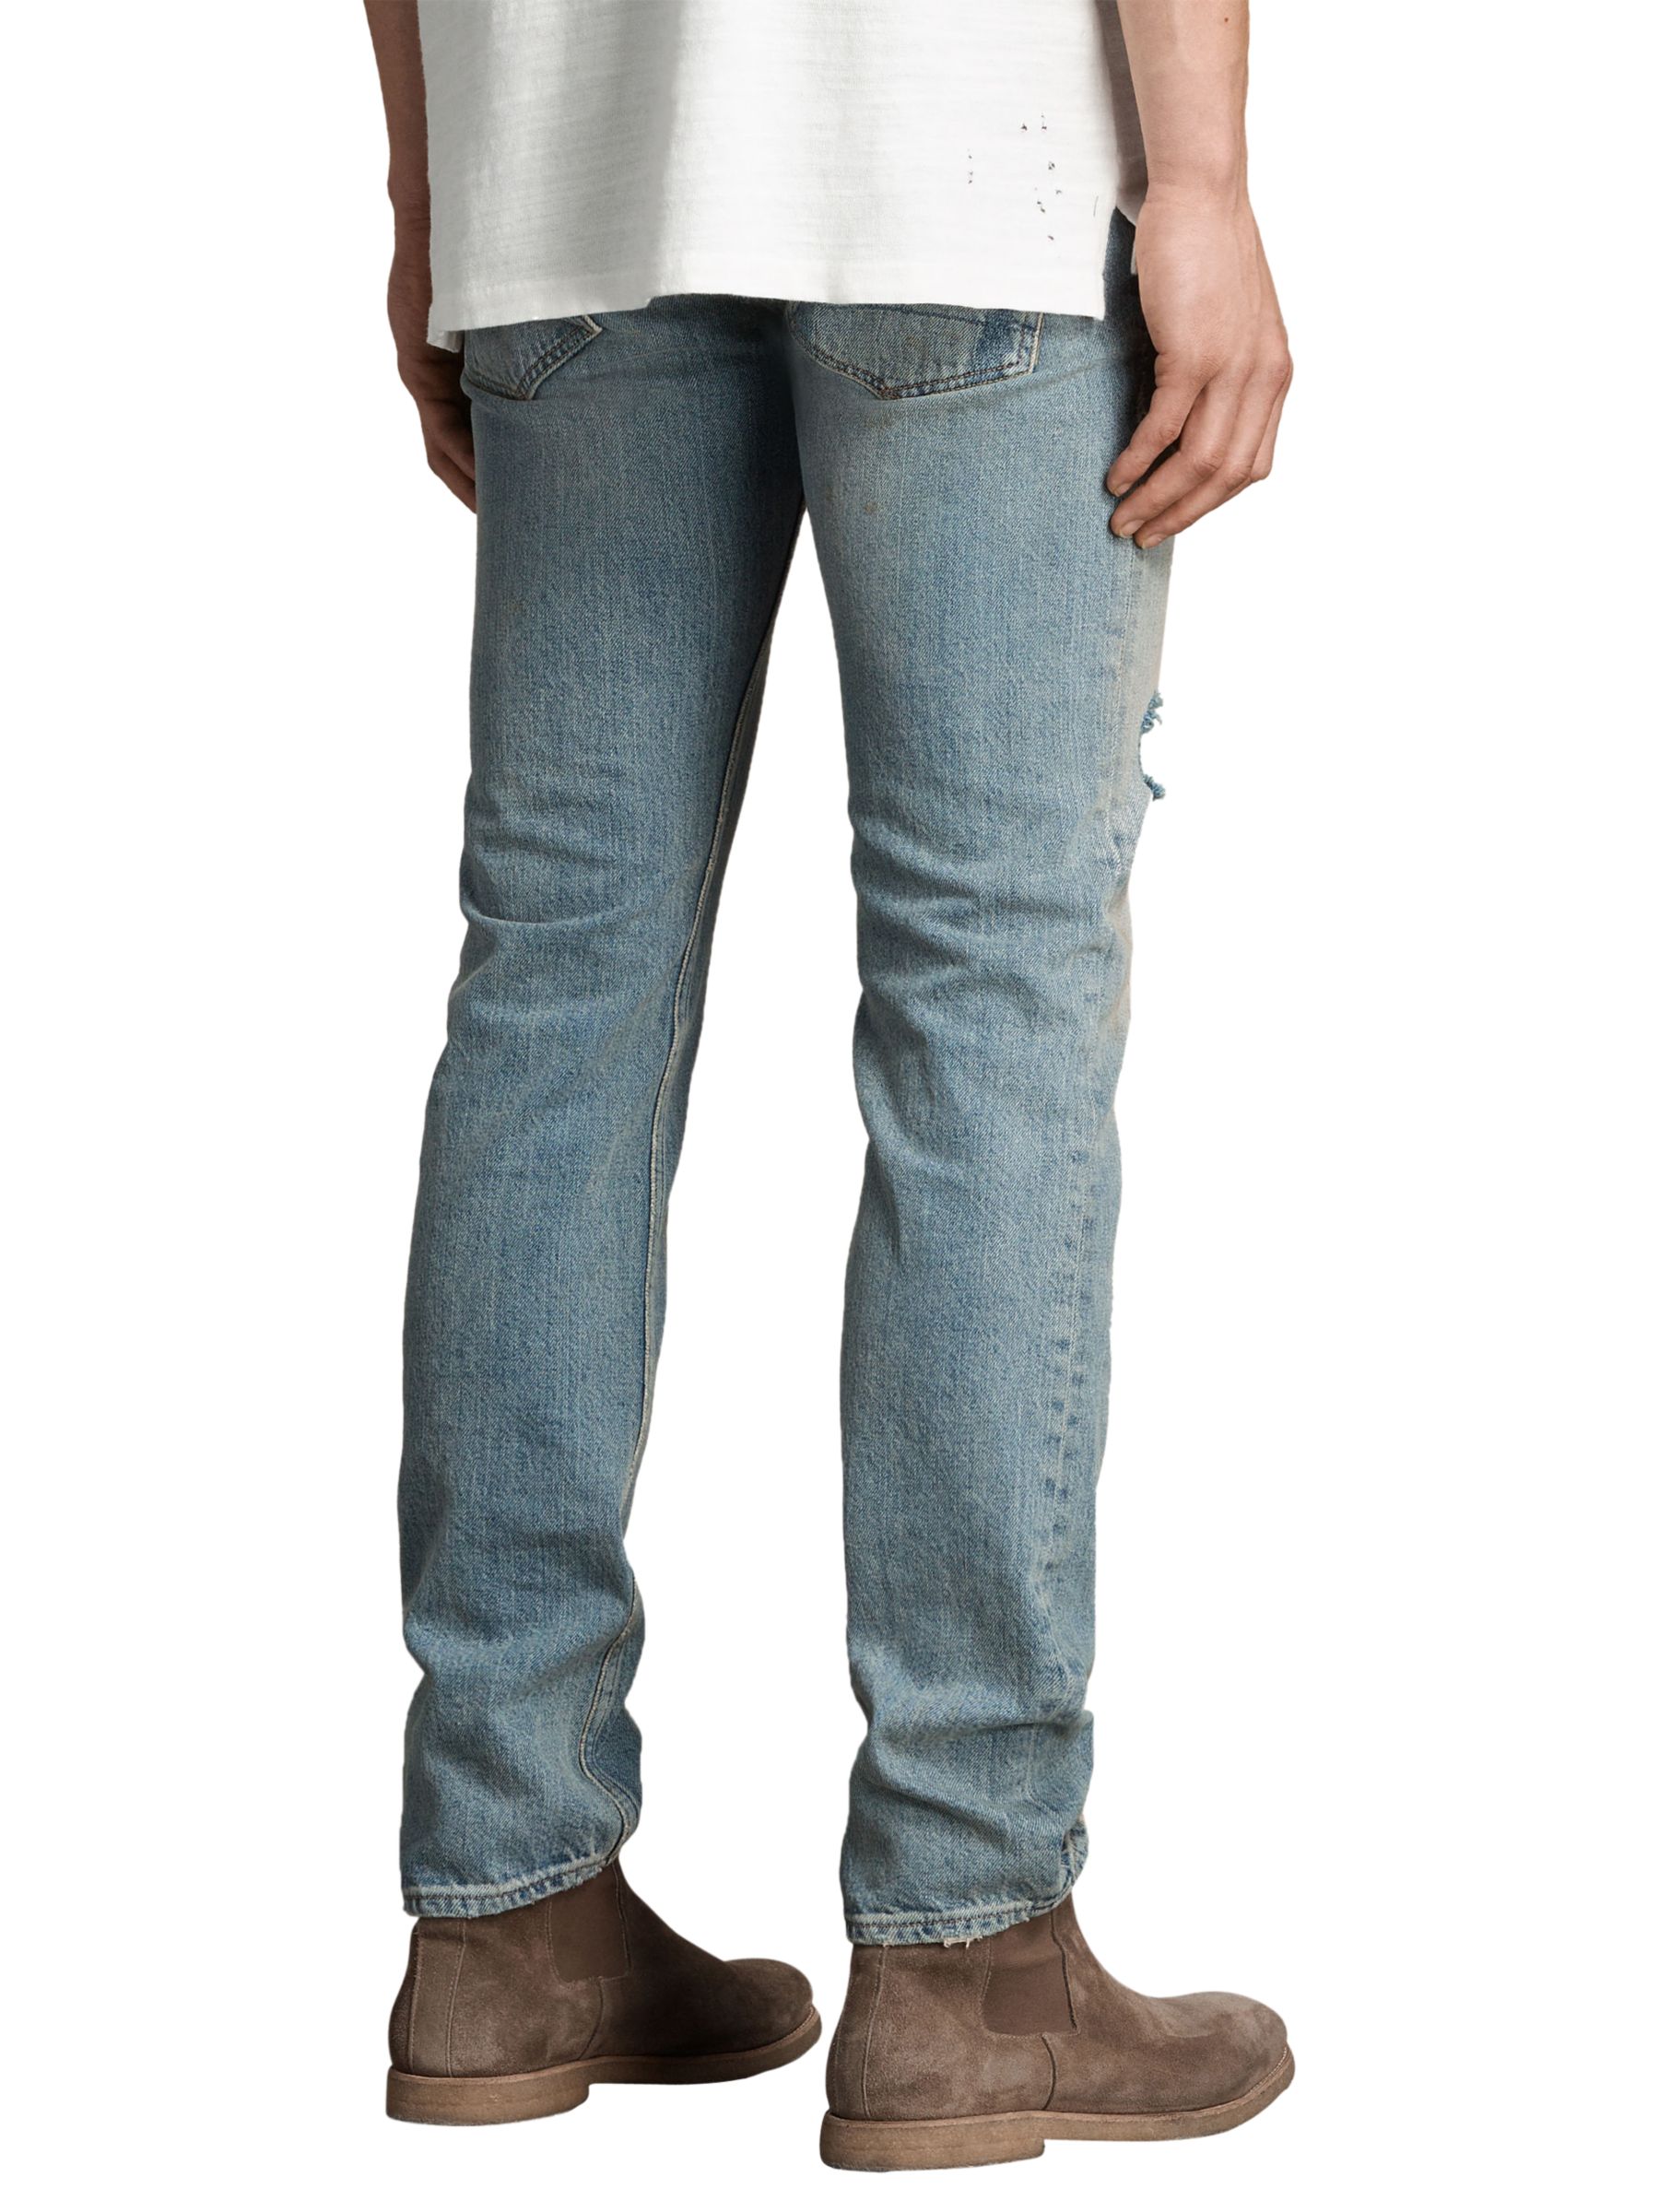 AllSaints Dakota Iggy Slim Distressed Jeans, Indigo Blue, 28R